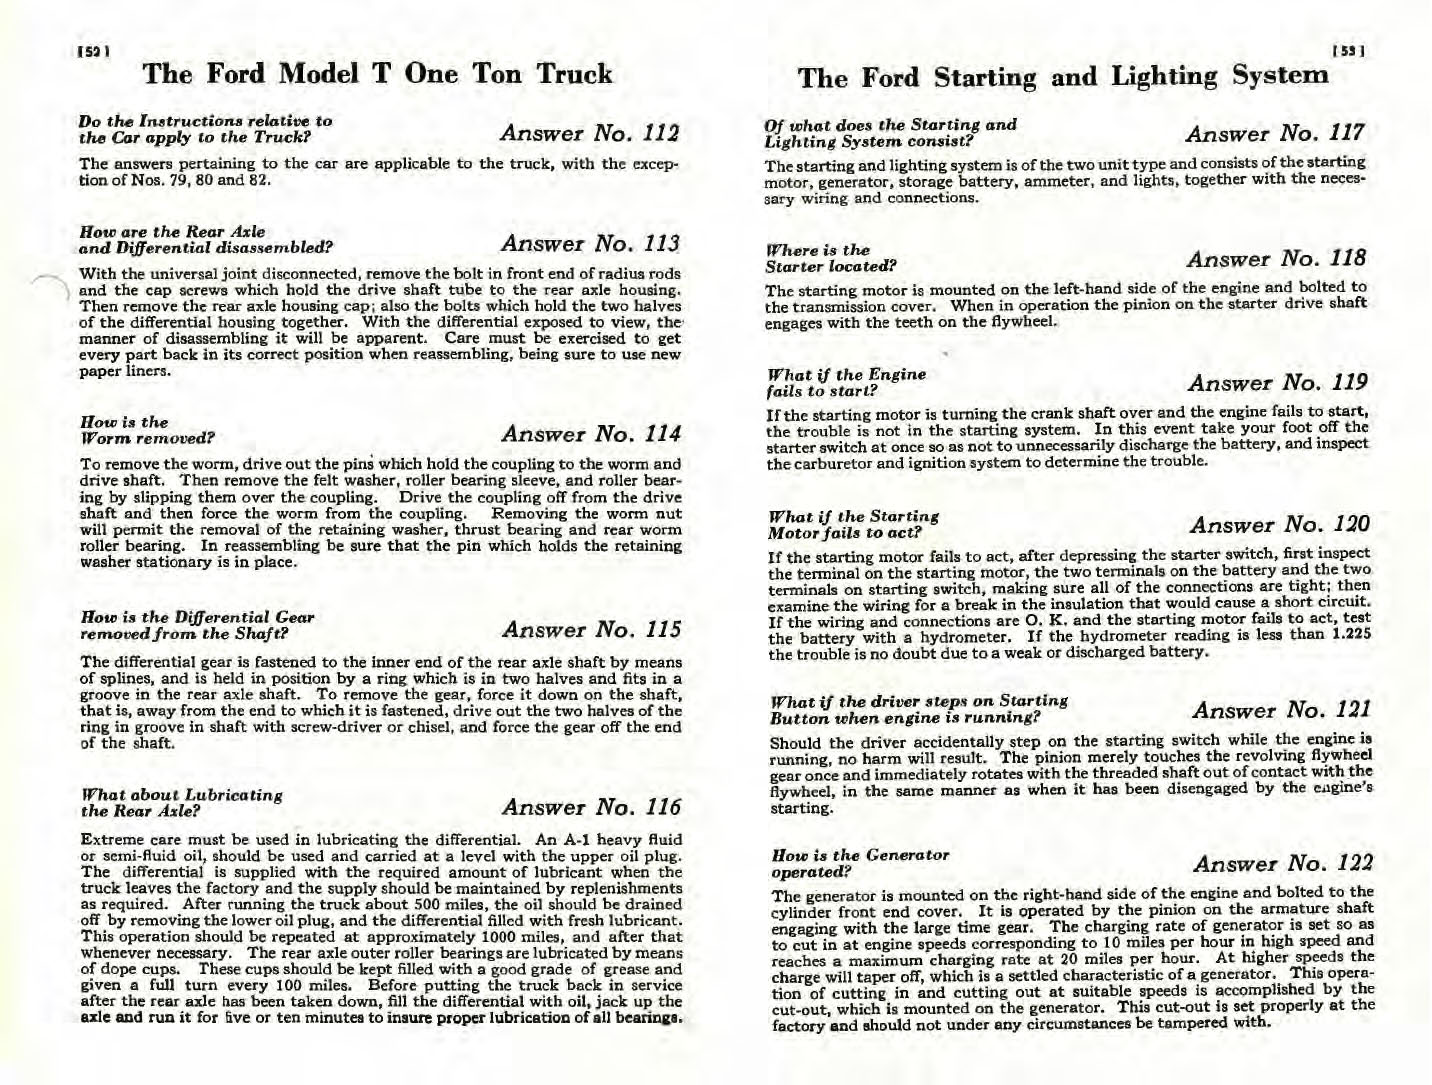 n_1926 Ford Owners Manual-52-53.jpg